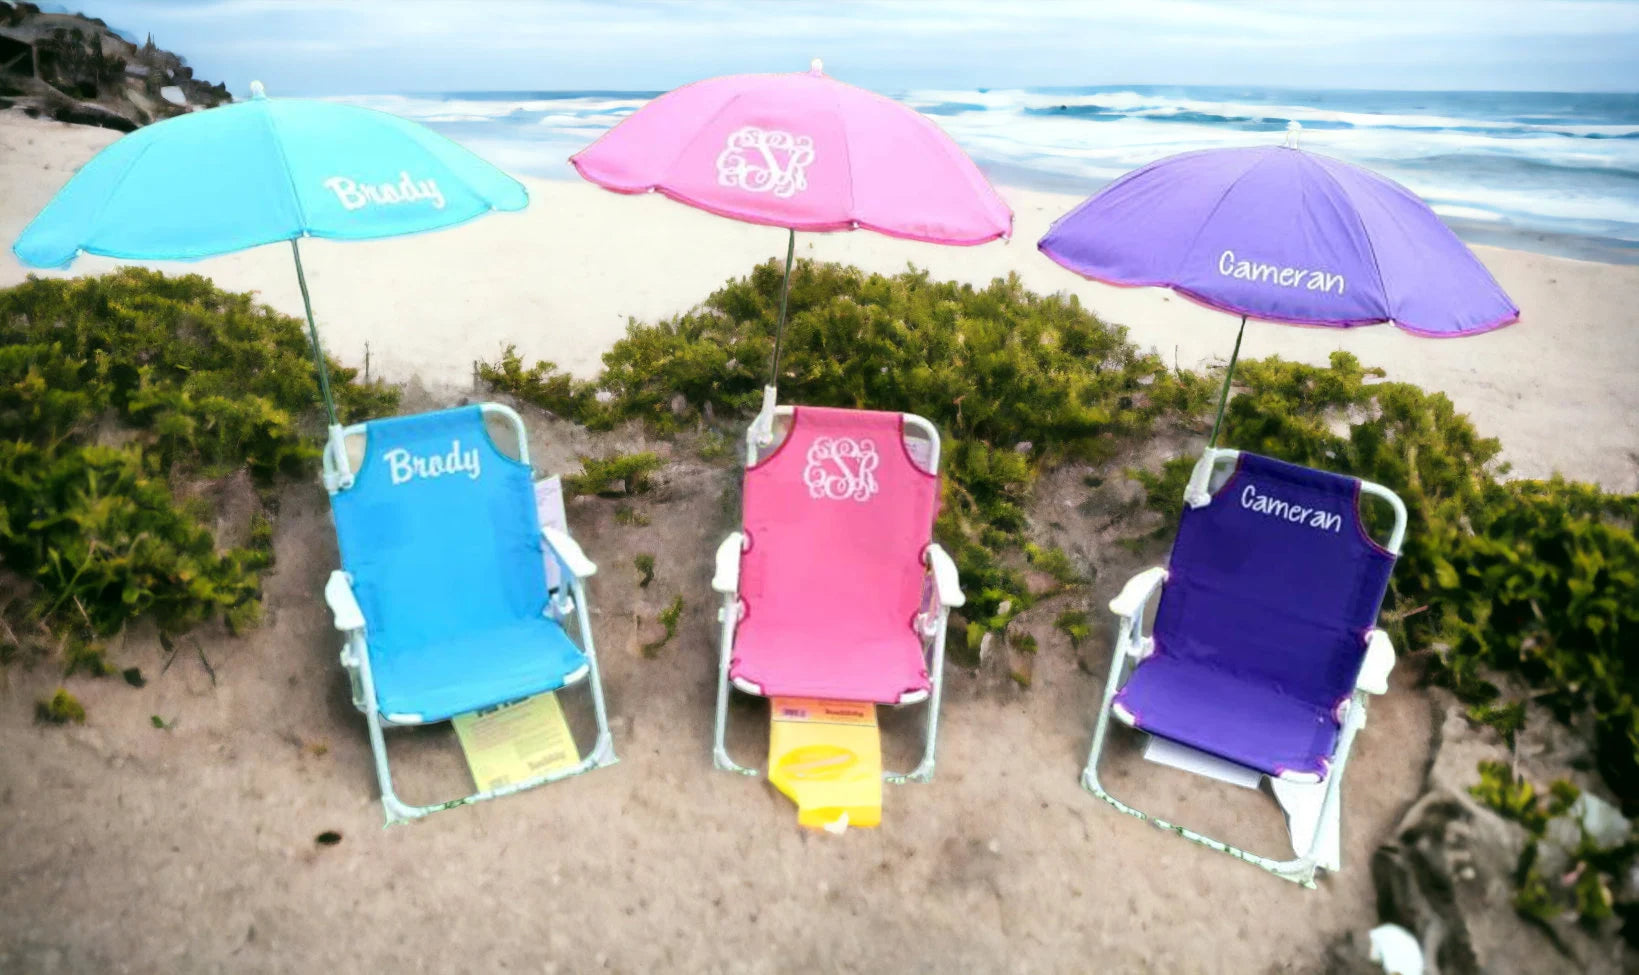 Monogrammed Kid's Beach Chair with Umbrella